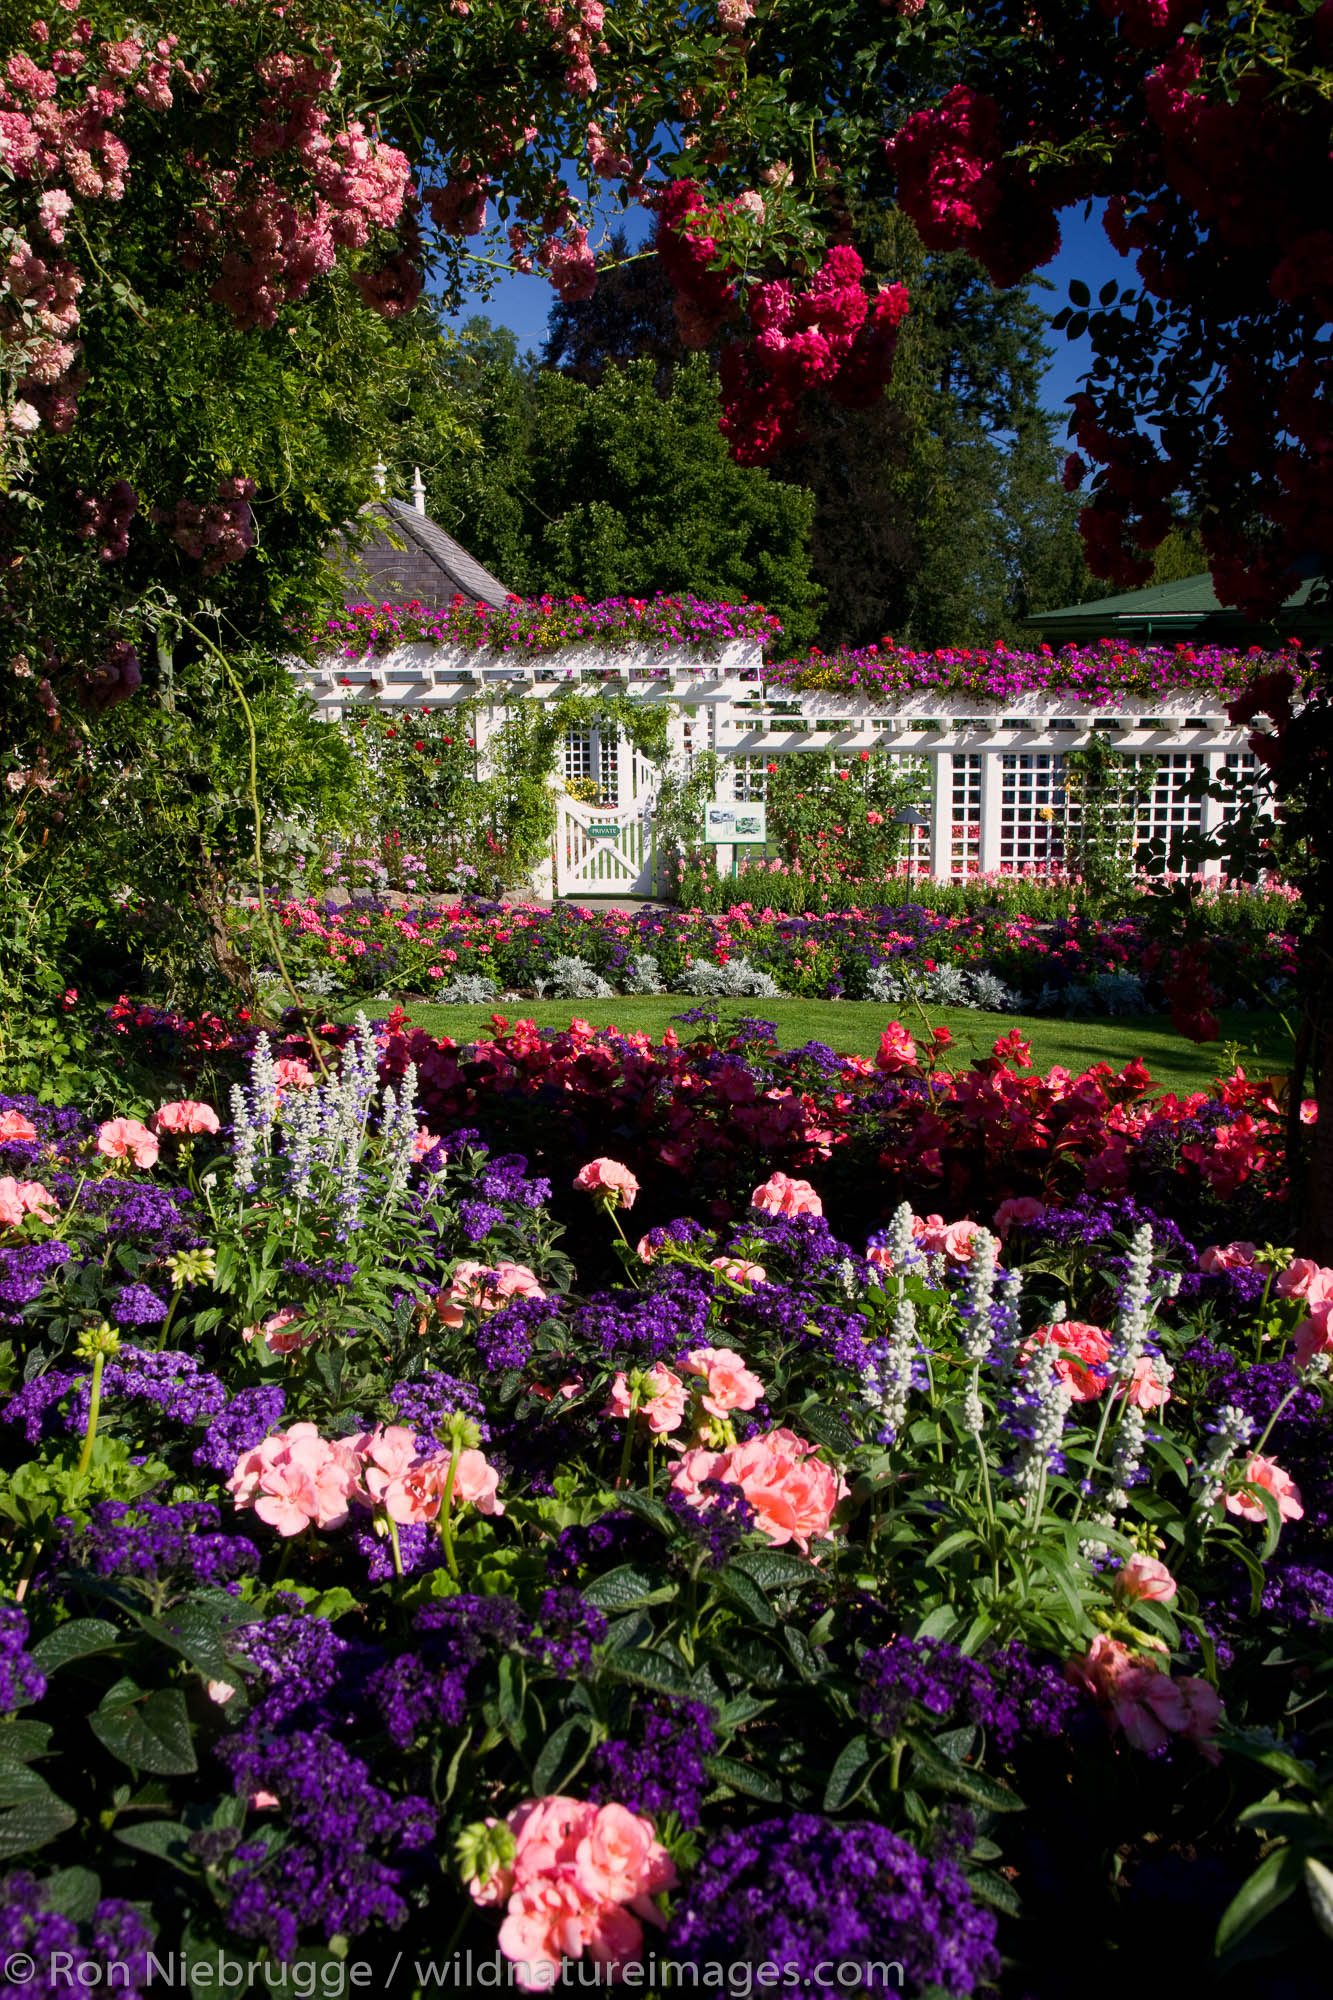 The Butchart Gardens, Victoria, Vancouver Island, British Columbia, Canada.